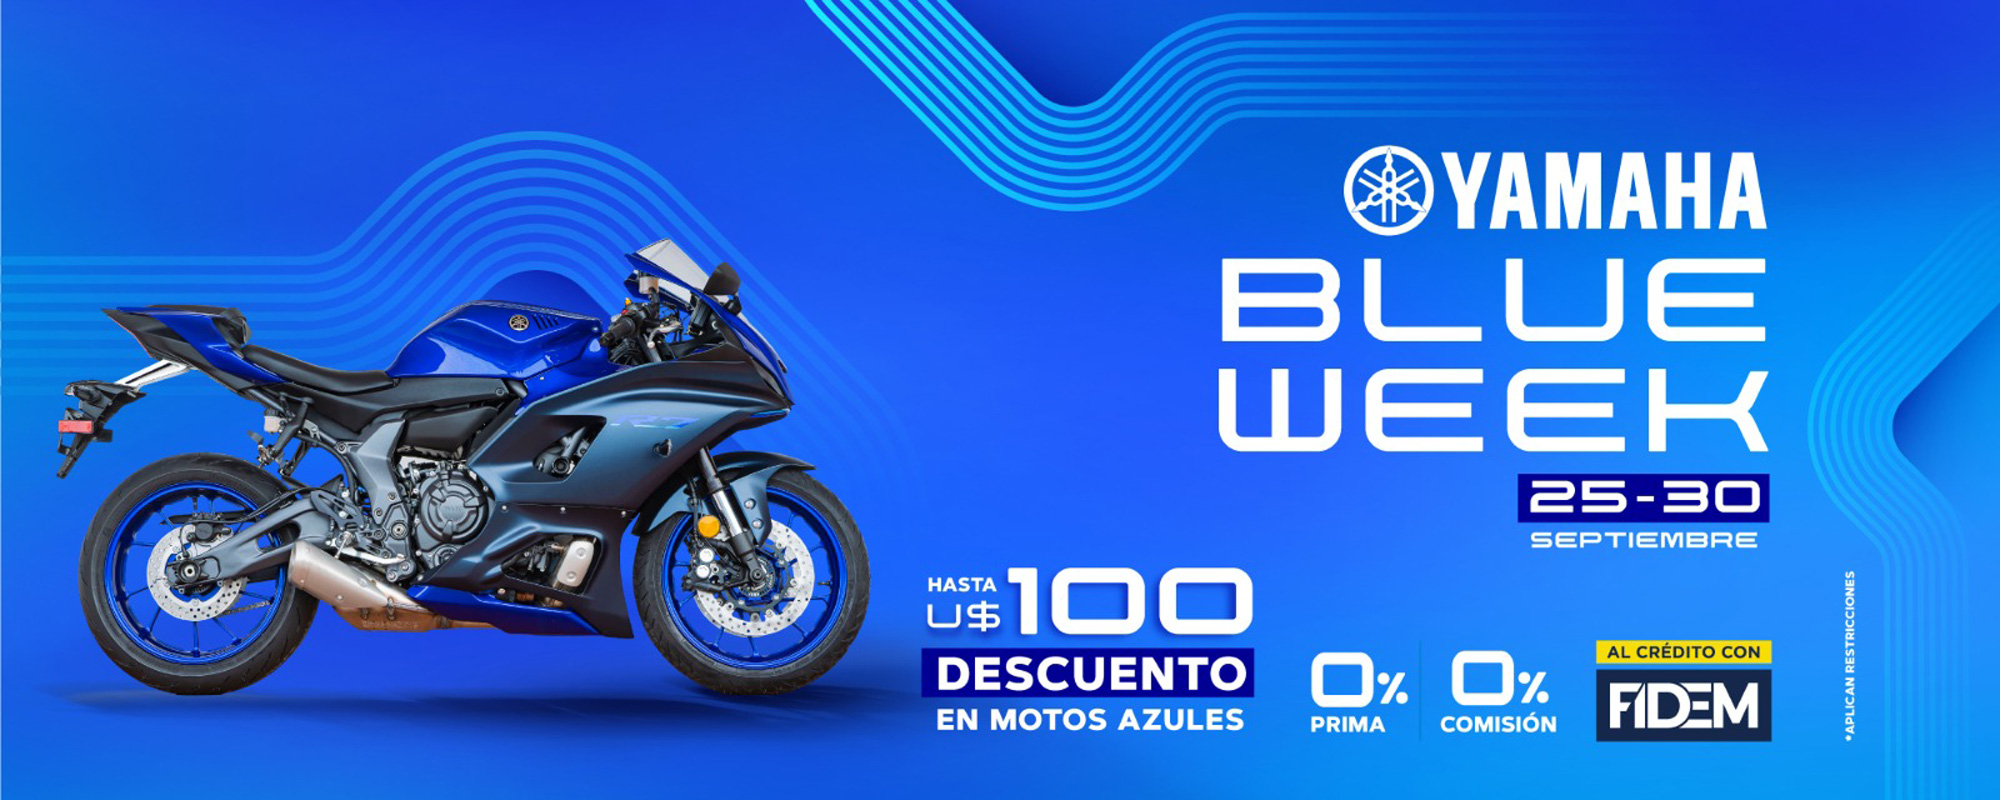 Yamaha-Blueweekend-2